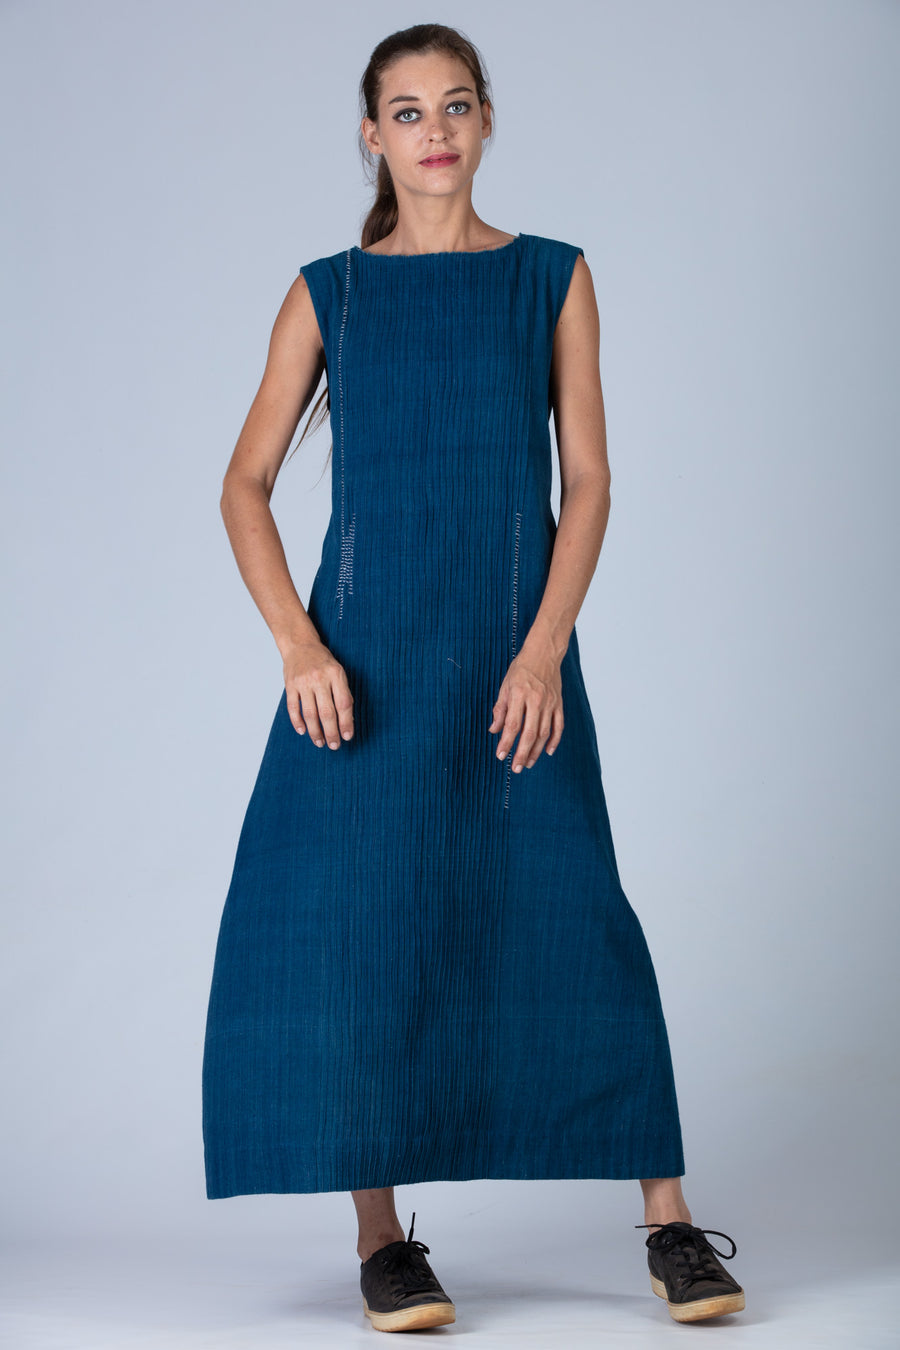 Natural Indigo Cotton Dress - NIKITA - Upasana Design Studio